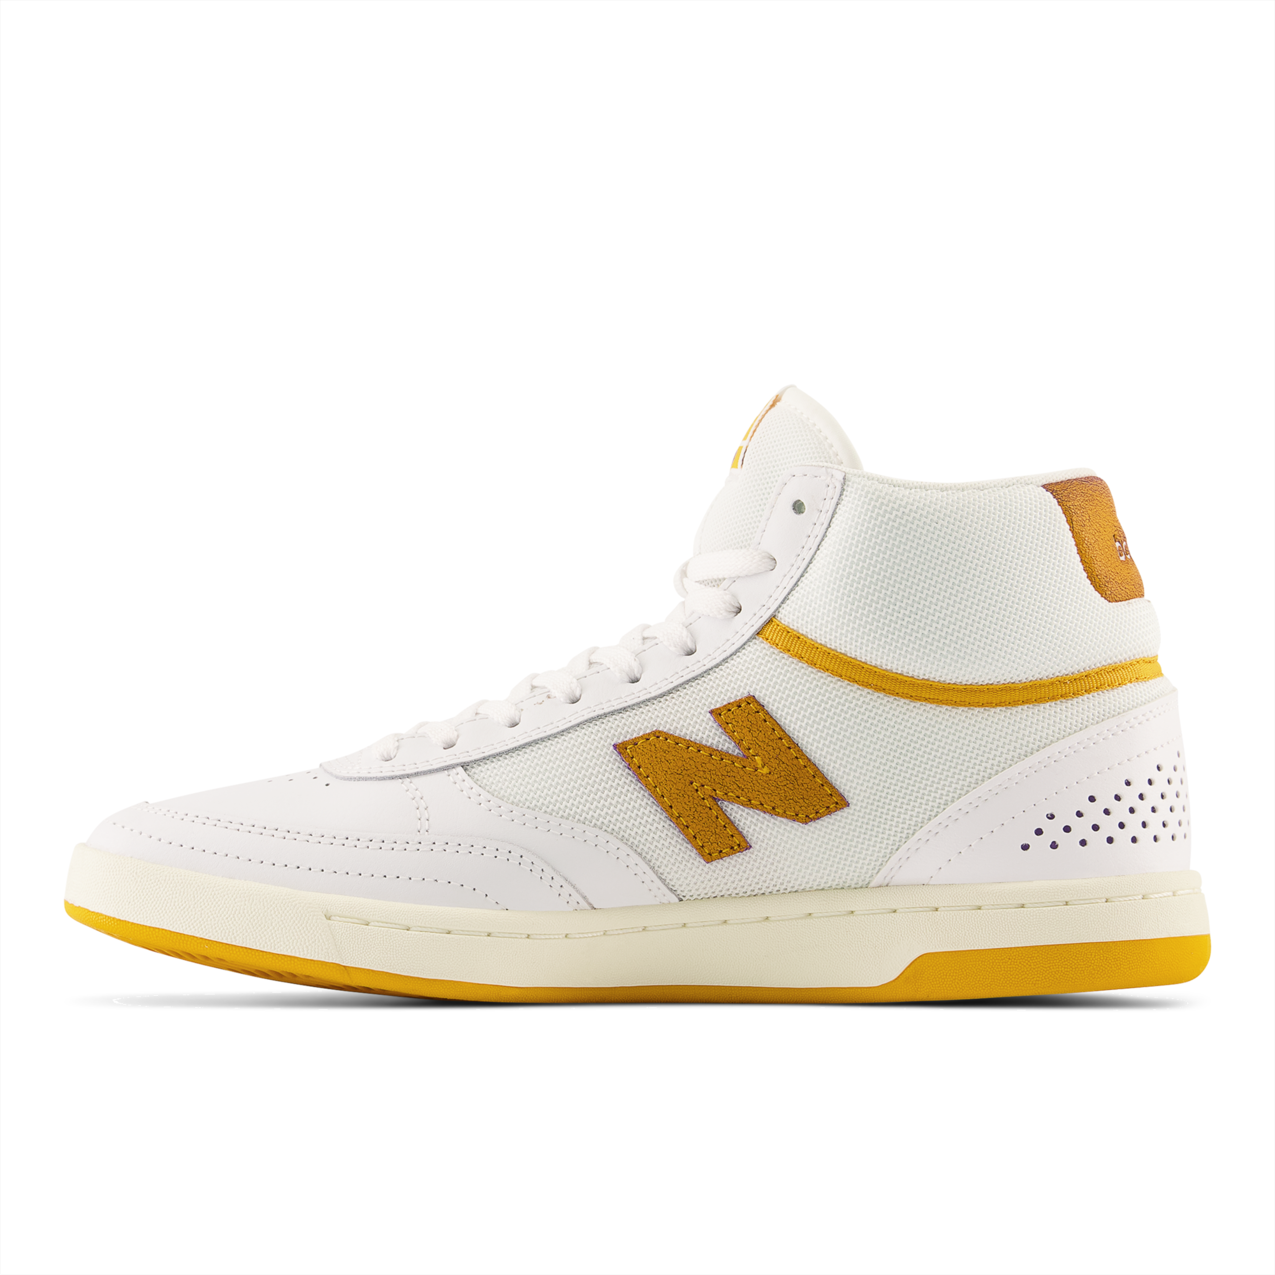 New Balance Numeric Men's 440 High White Yellow Shoes